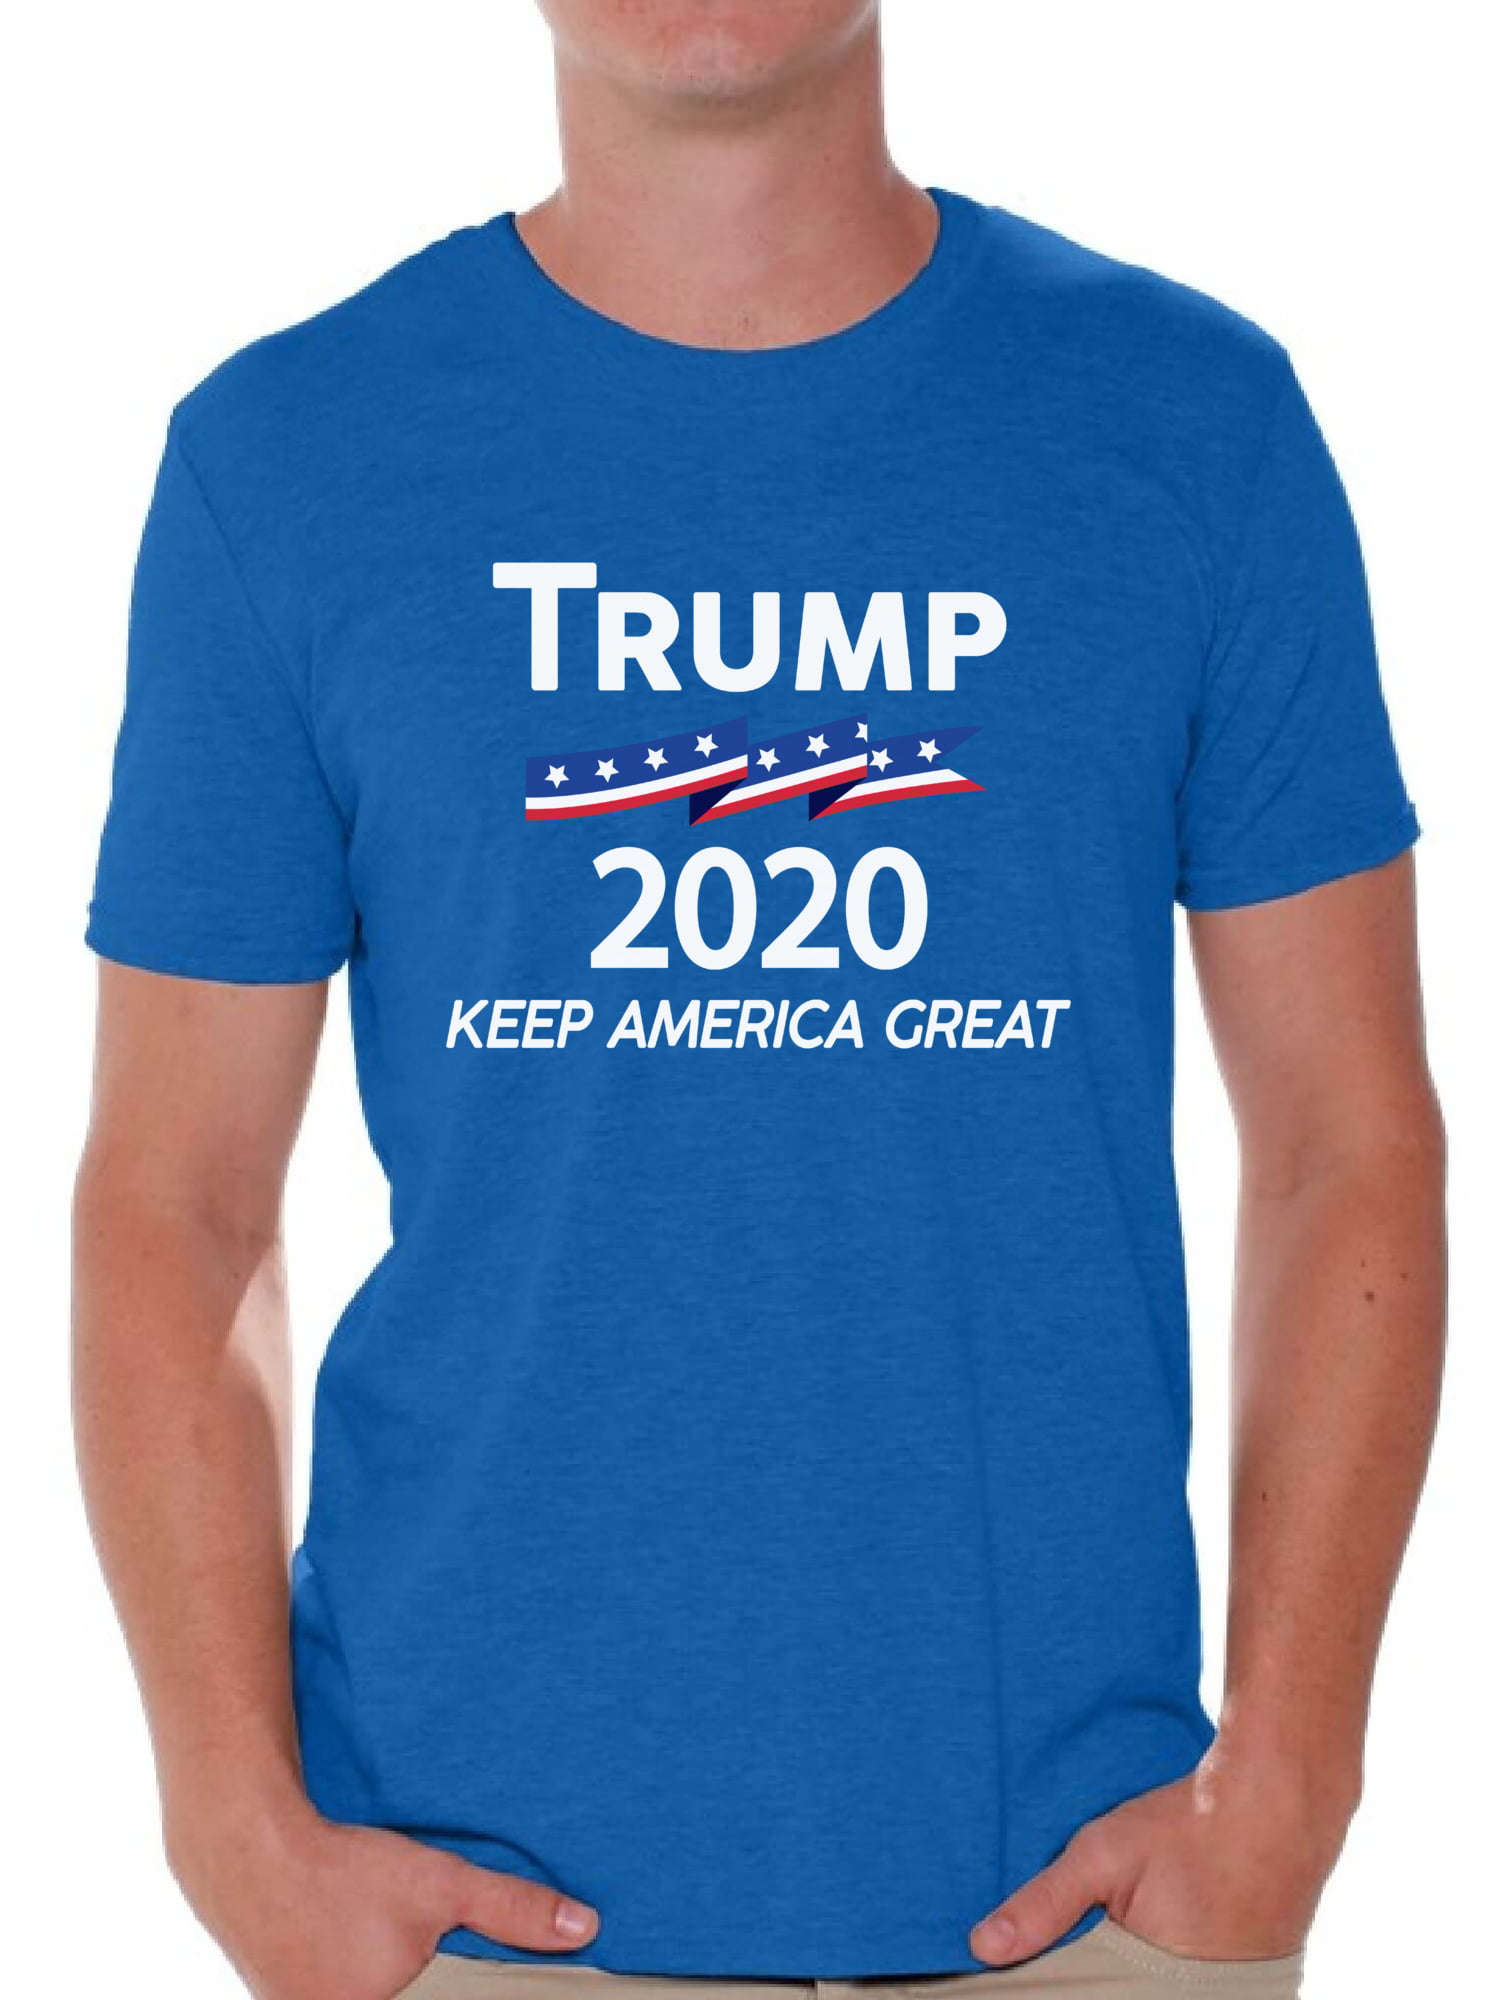 Lego Man Funny Gift USA Build A Wall T-shirt T Shirt Tee Donald Trump